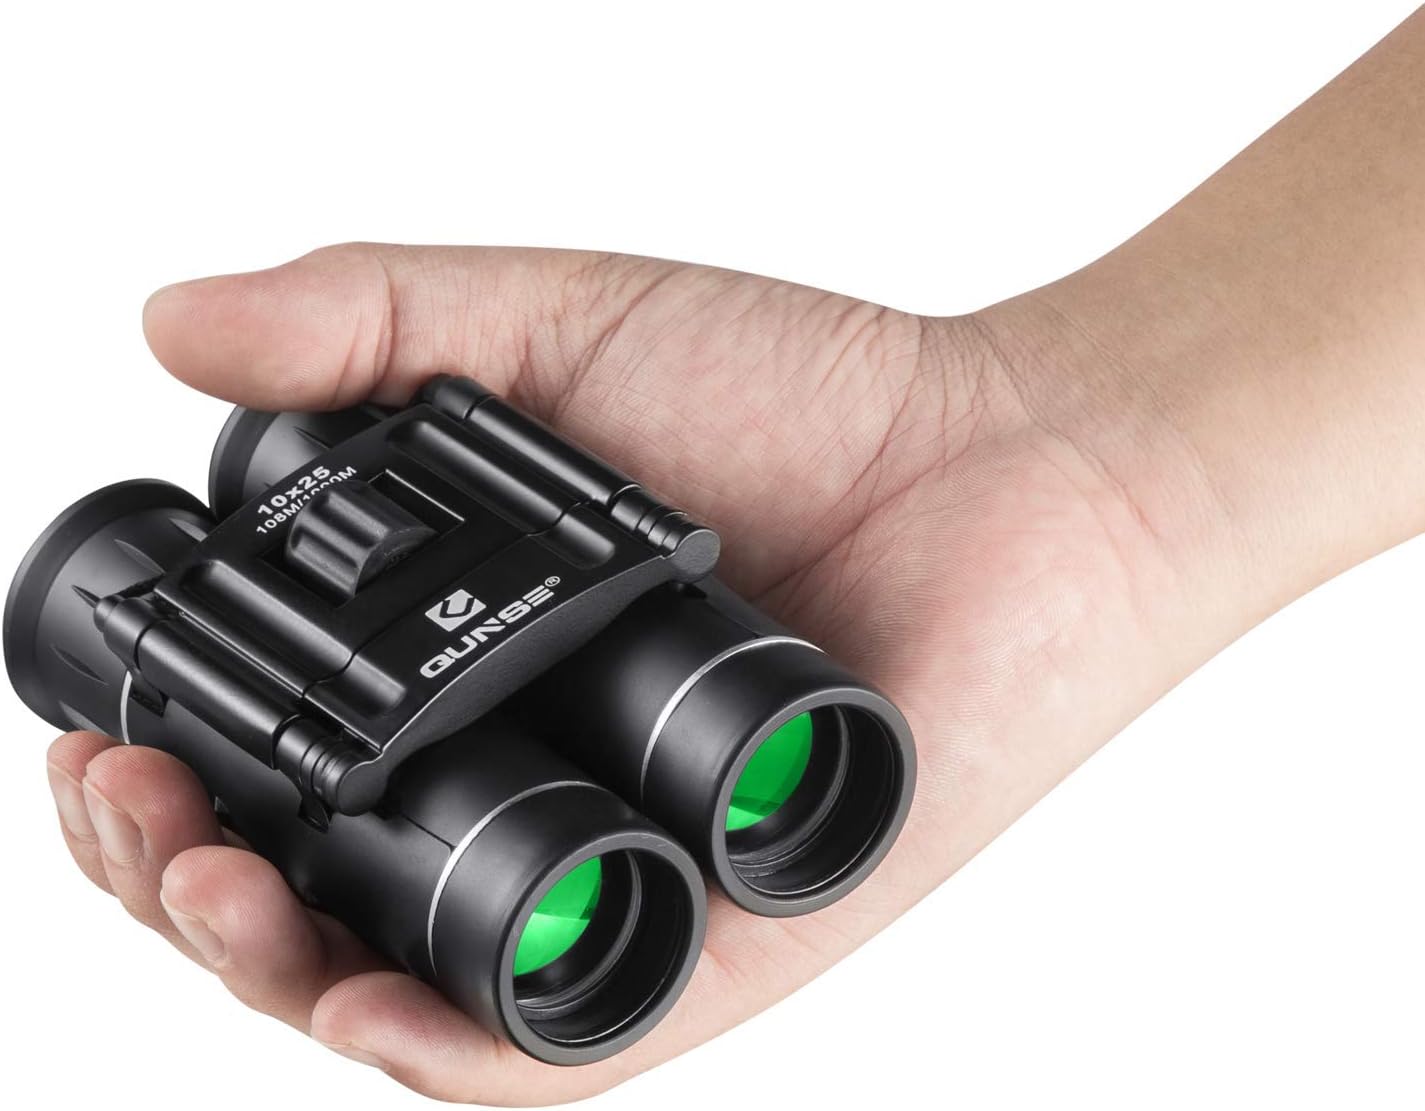 QUNSE Mini Pocket Small Binoculars, 10x25 Bird Watching Compact Folding Binoculars with Waterproof for Adults/Kids/Travelling/Sightseeing/Hunting